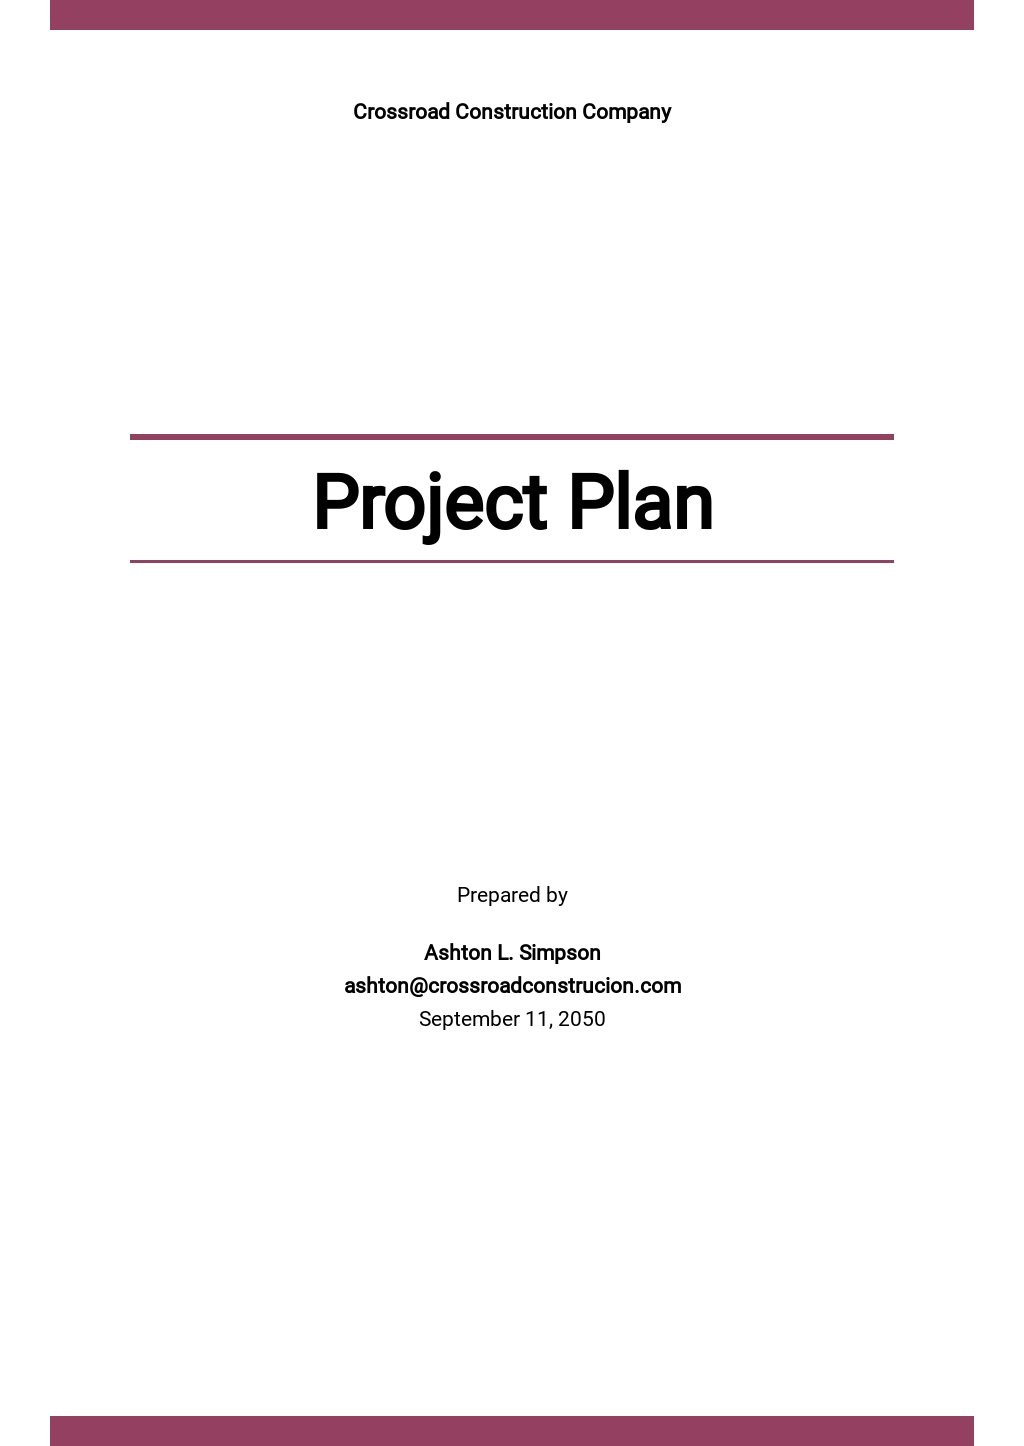 Sample Project Plan